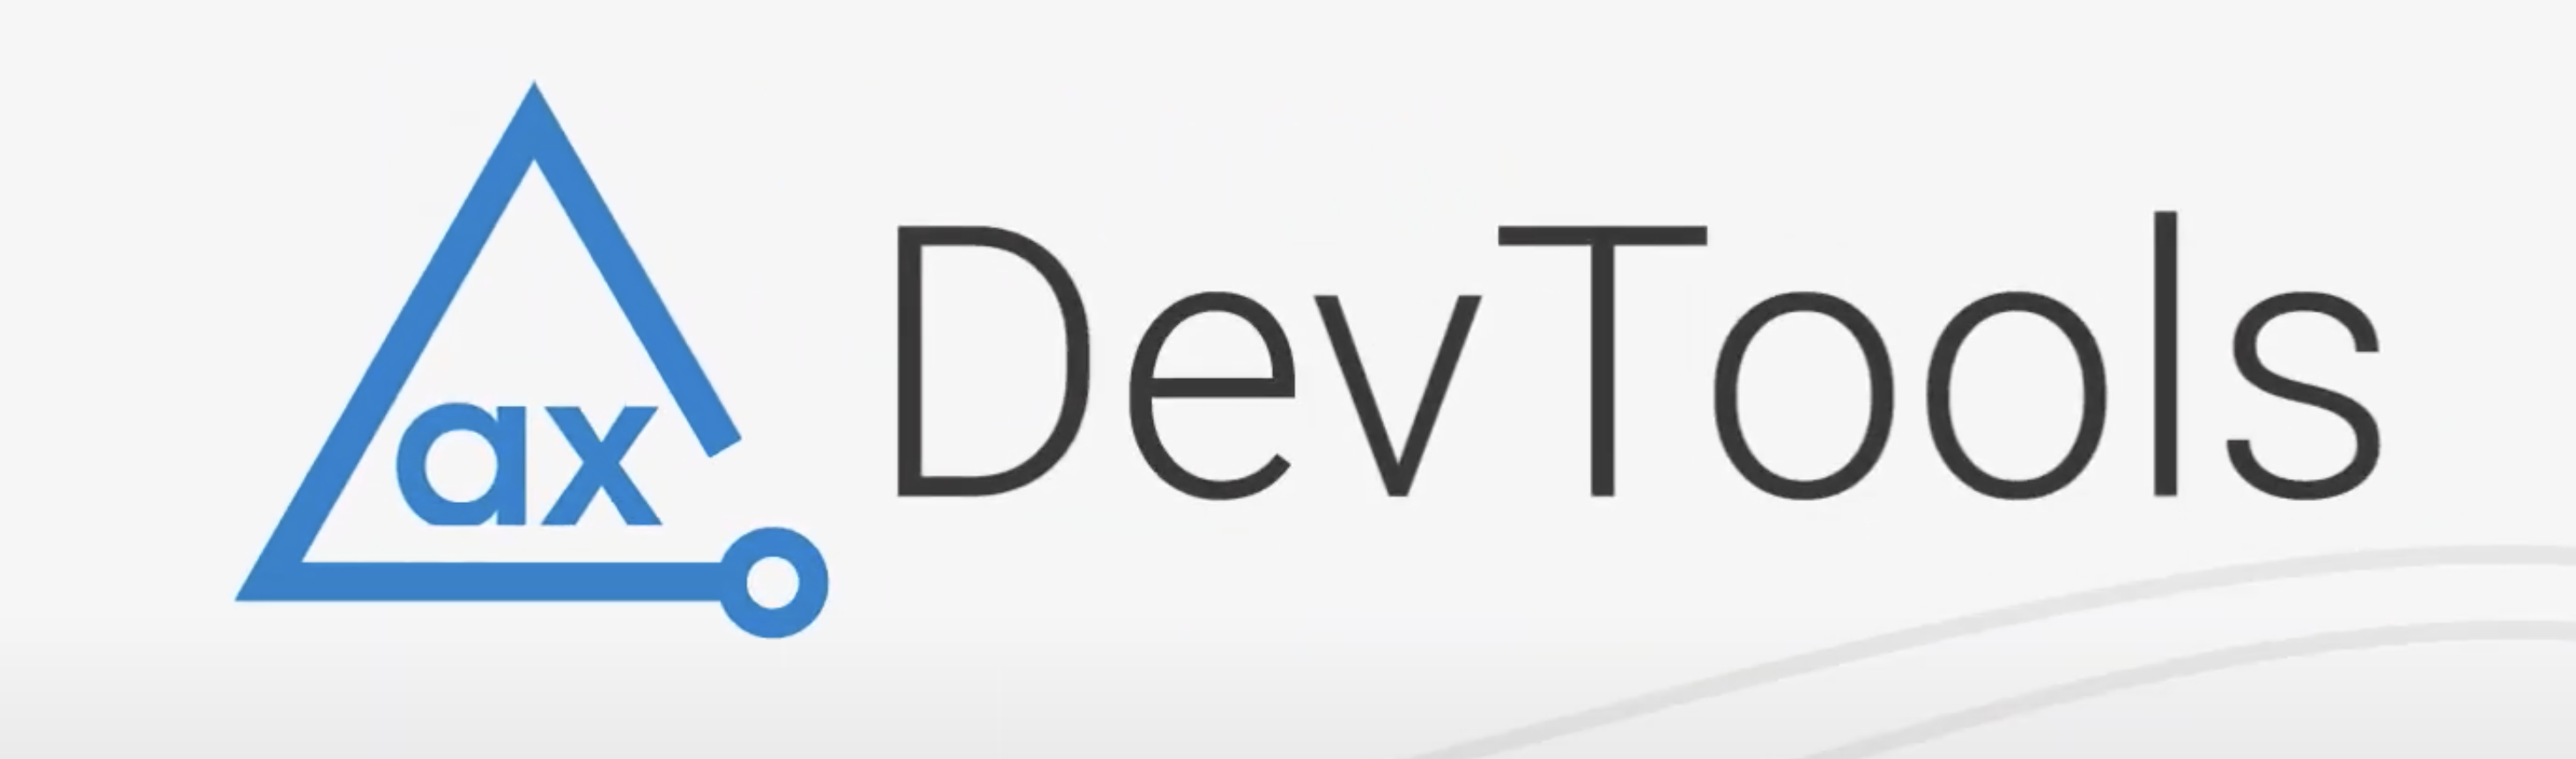 axe DevTools by Deque logo